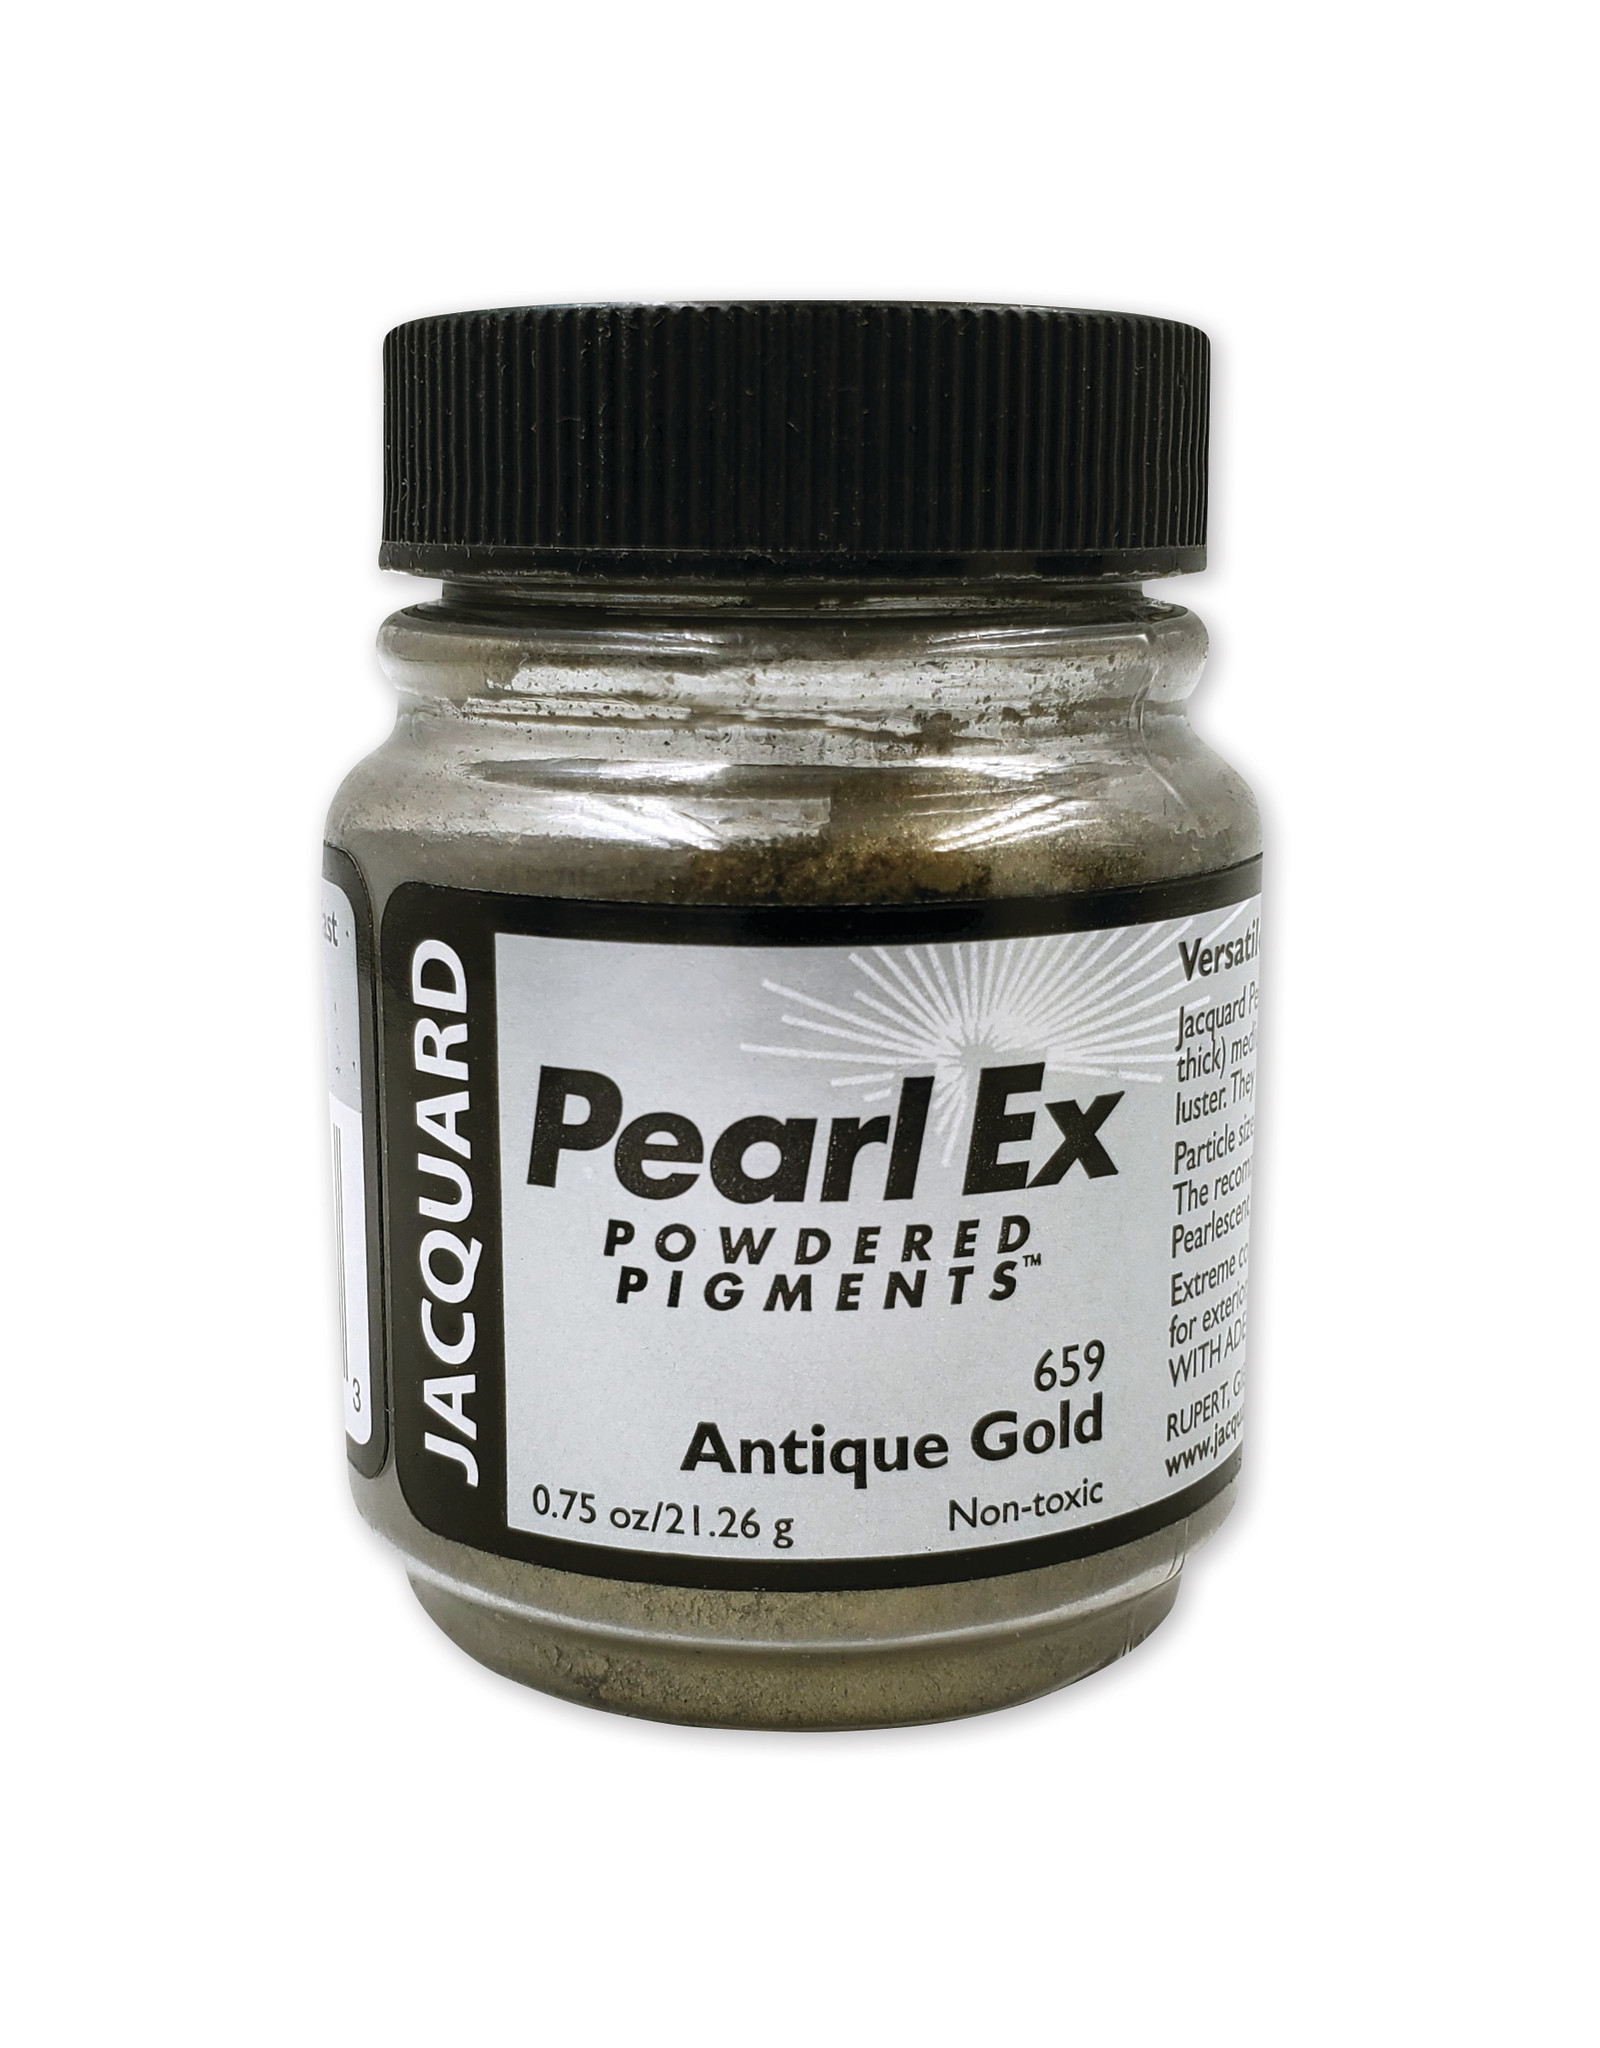 Jacquard Jacquard Pearl Ex, Antique Gold #659 3/4oz